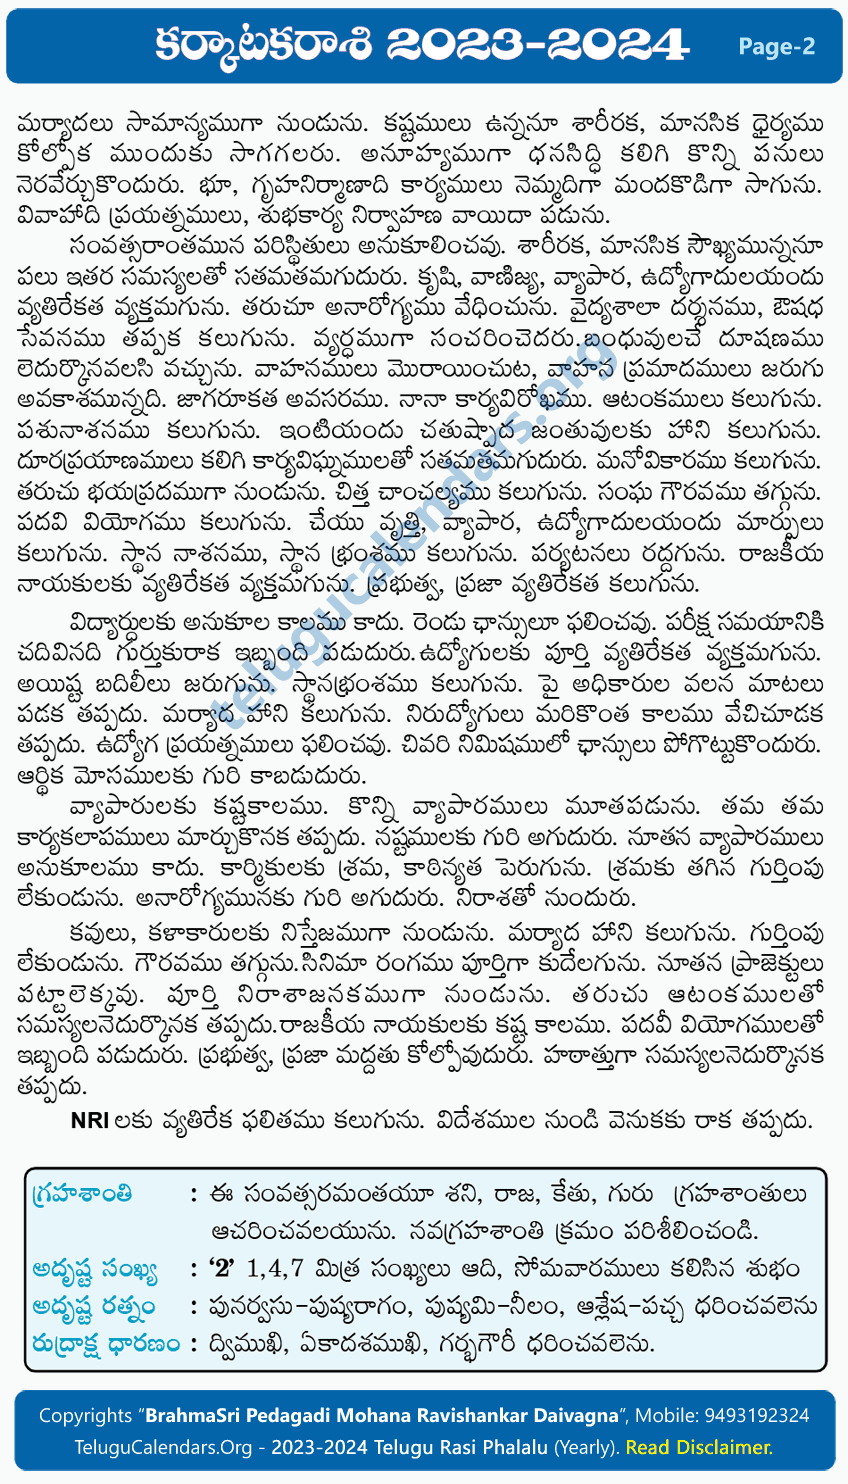 Karkataka Rasi Phalalu 20232024 Yearly Predictions & Remedies in Telugu